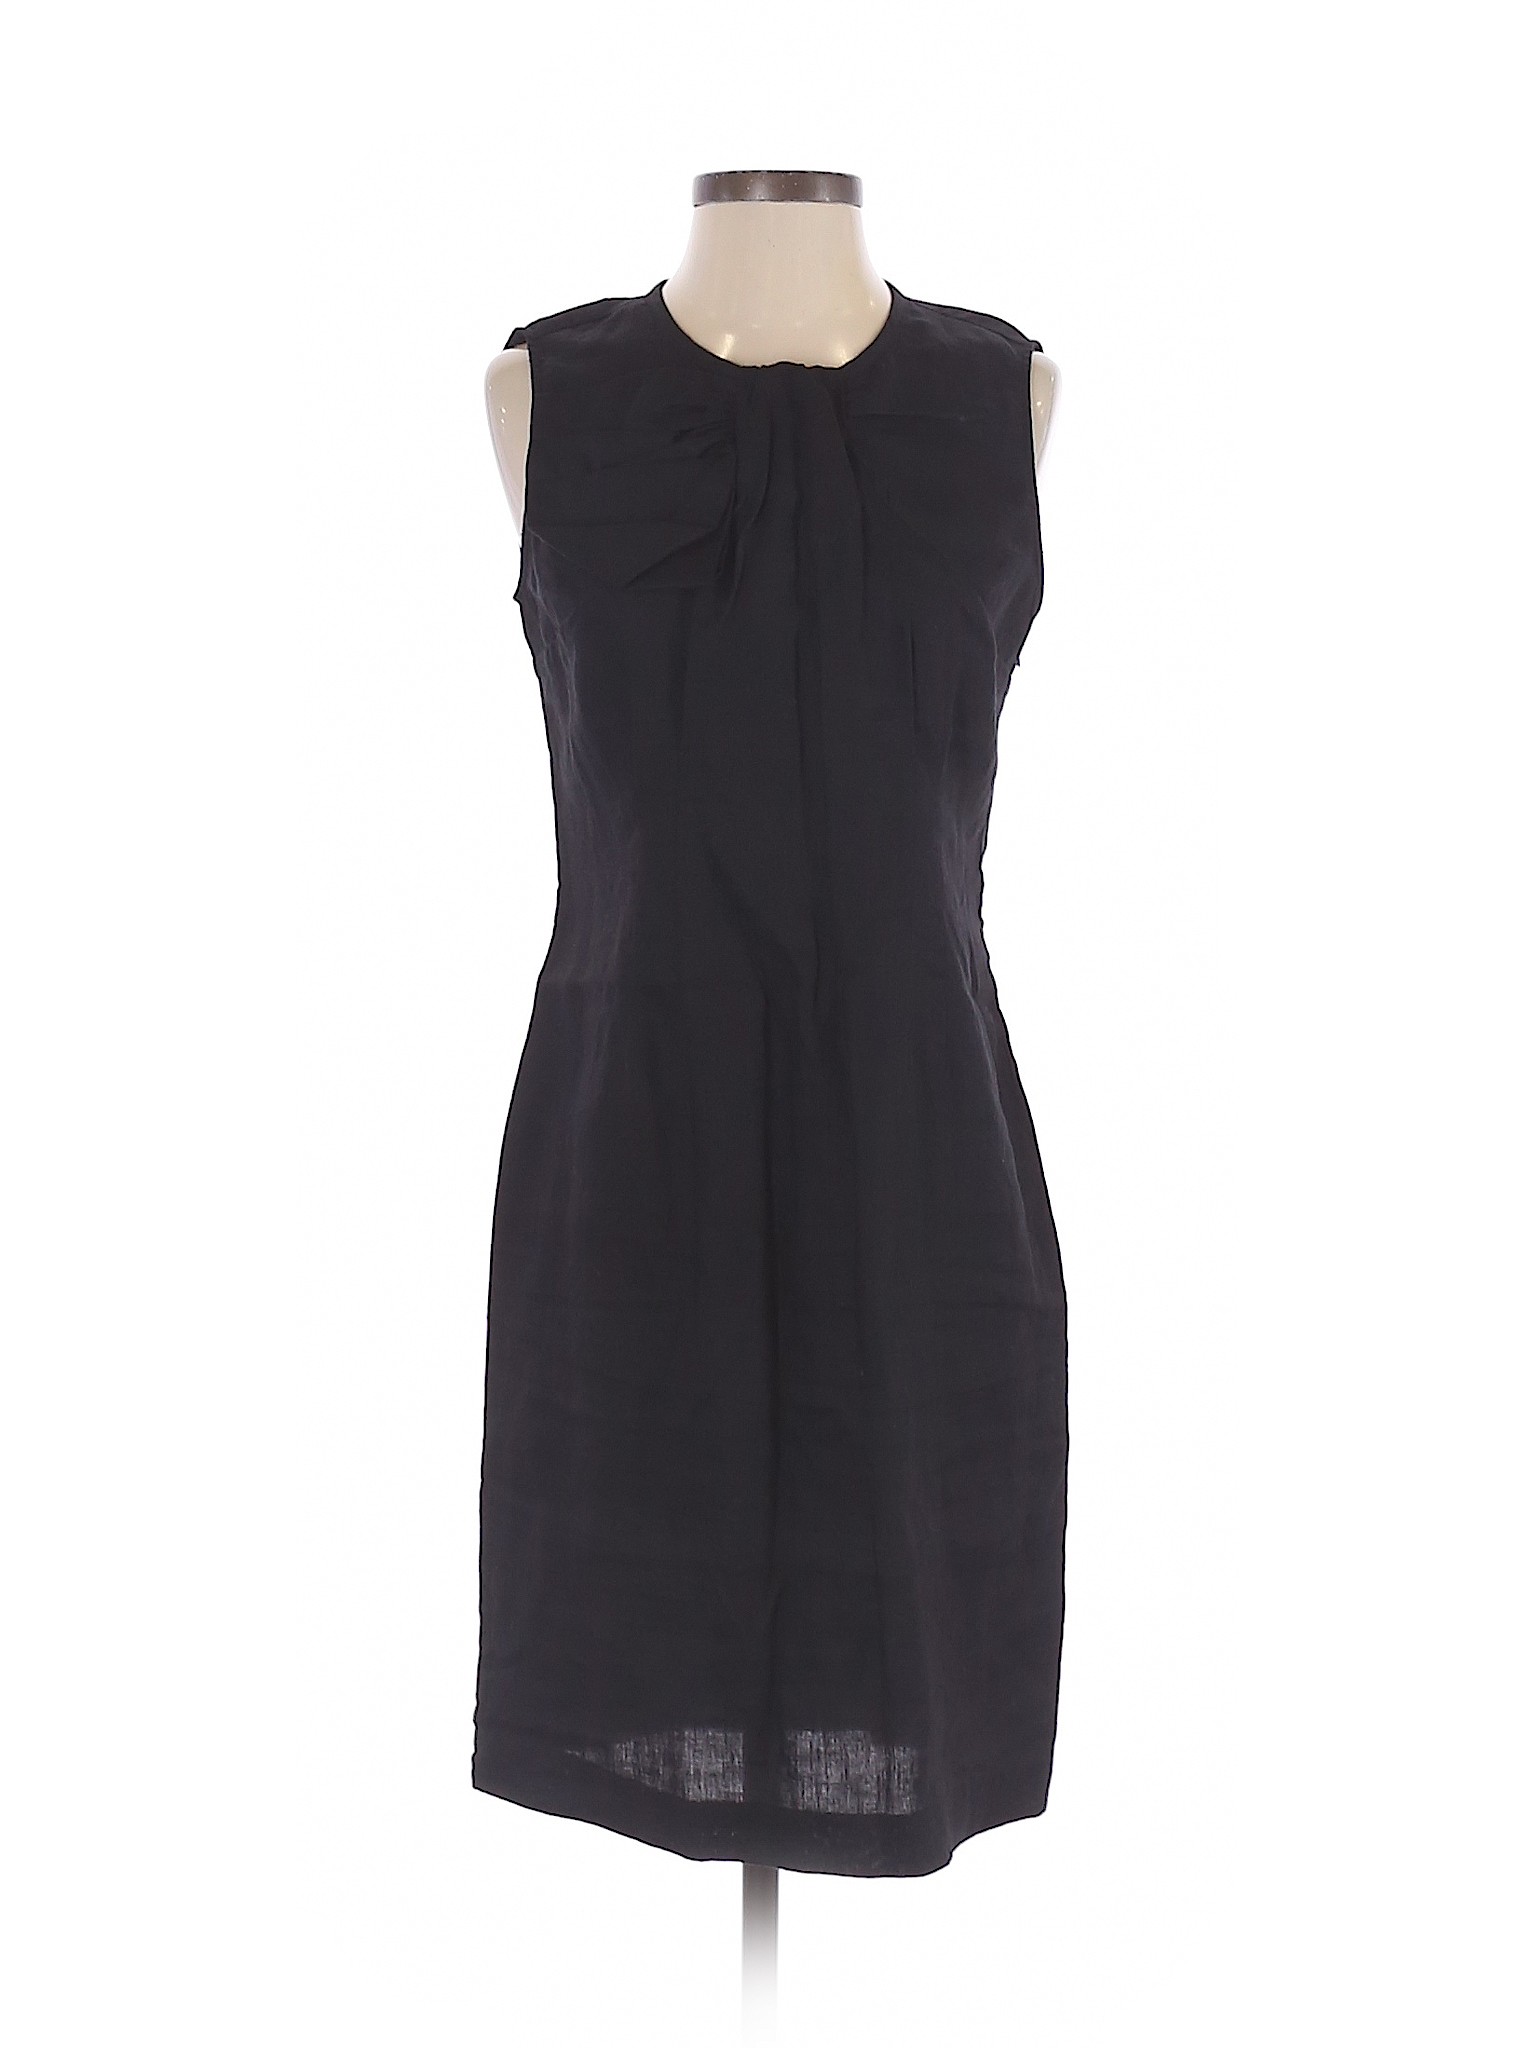 Adrienne Vittadini Women Black Casual Dress 4 | eBay